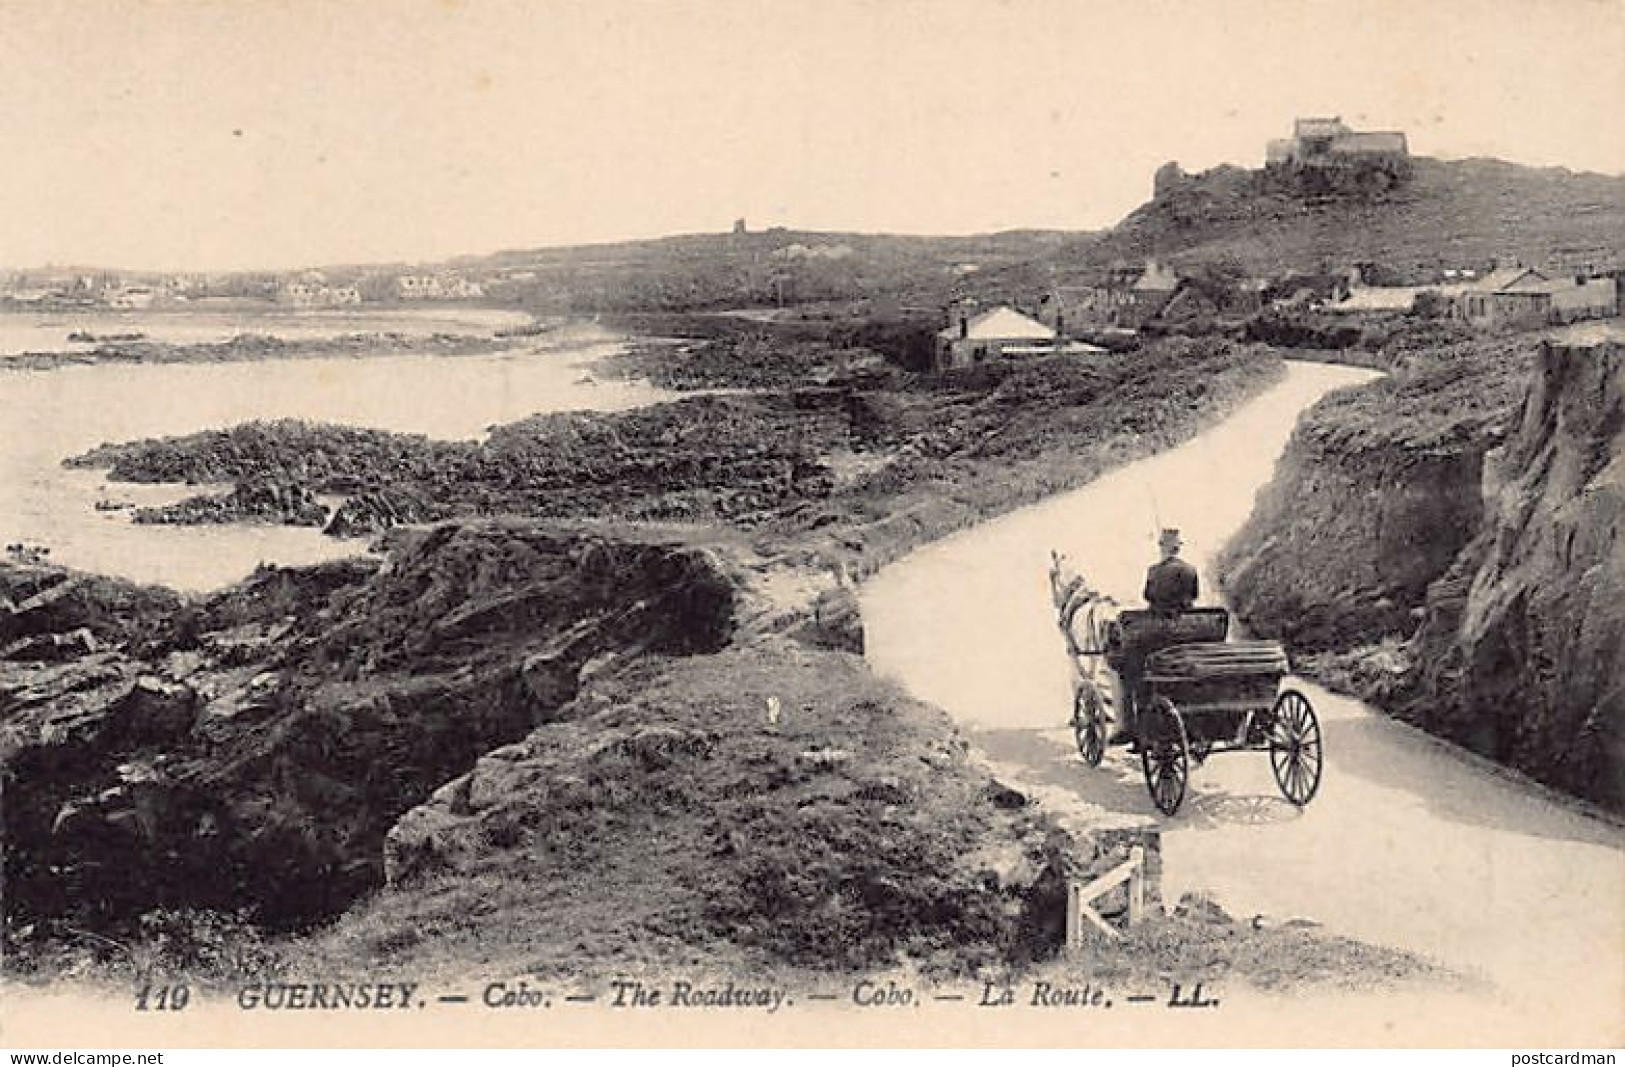 Guernsey - COBO - The Roadway - Publ. Levy L.L. 119 - Guernsey